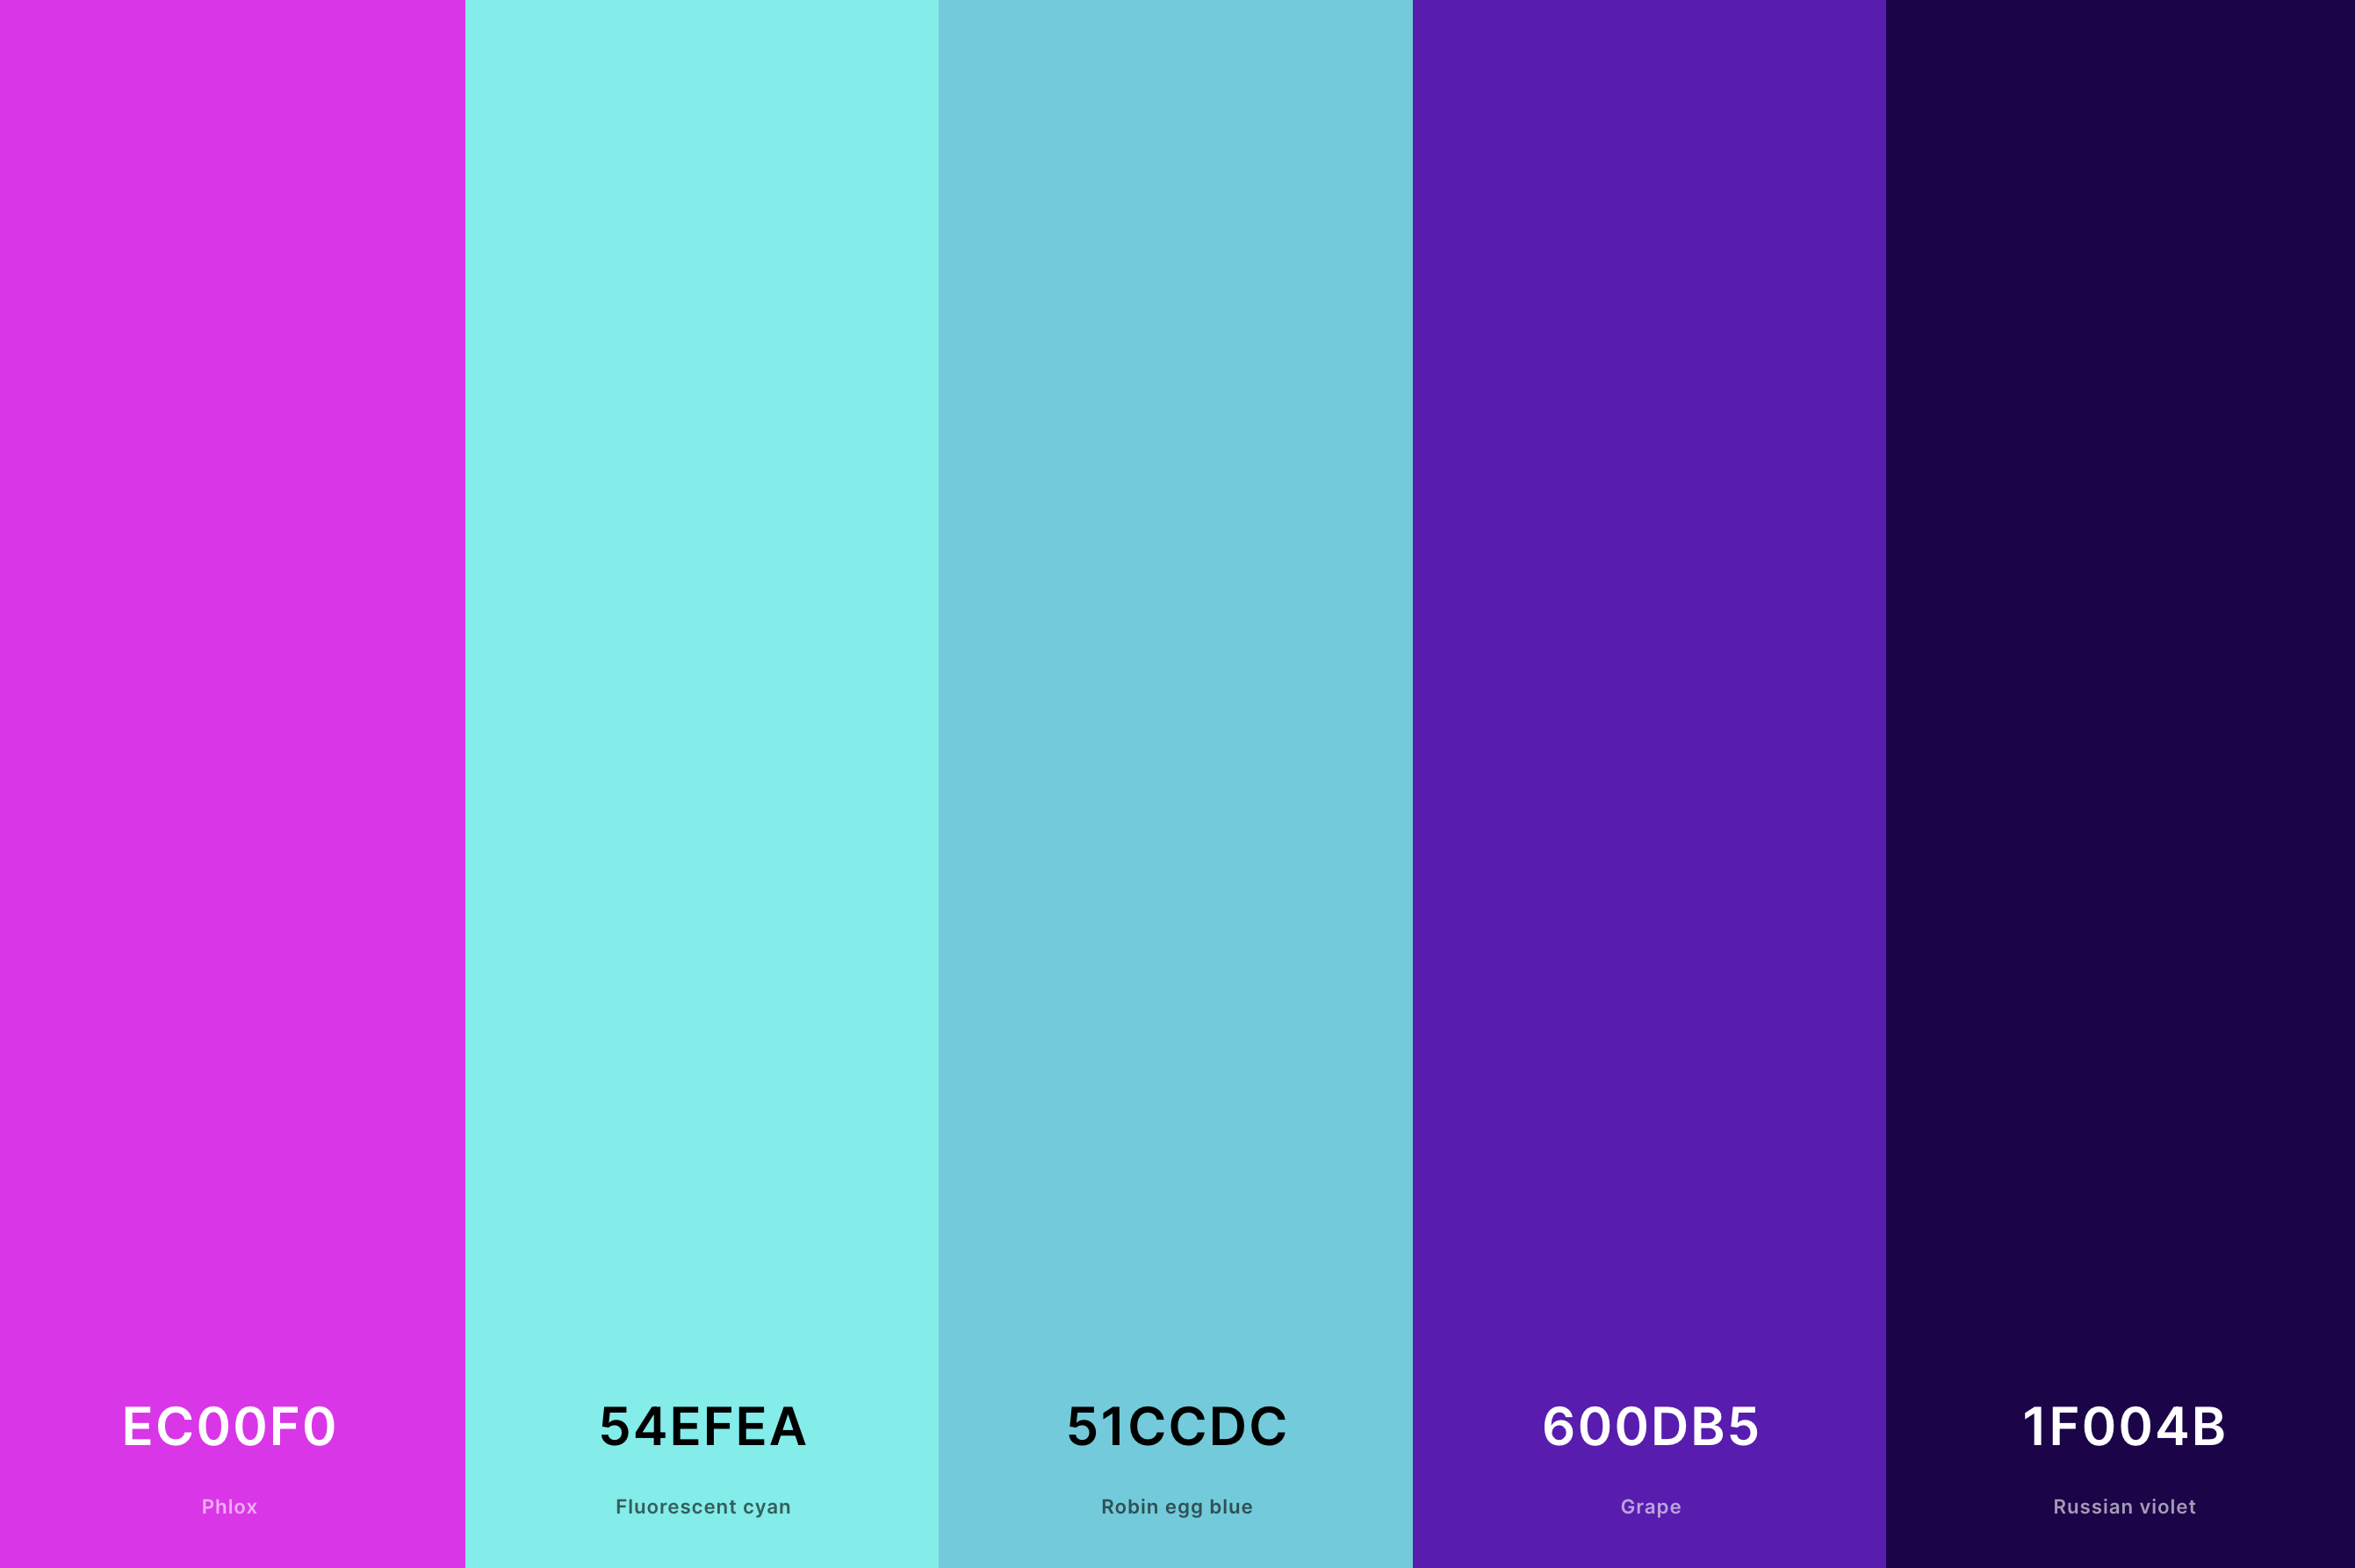 11. Retro Cyberpunk Color Palette Color Palette with Phlox (Hex #EC00F0) + Fluorescent Cyan (Hex #54EFEA) + Robin Egg Blue (Hex #51CCDC) + Grape (Hex #600DB5) + Russian Violet (Hex #1F004B) Color Palette with Hex Codes